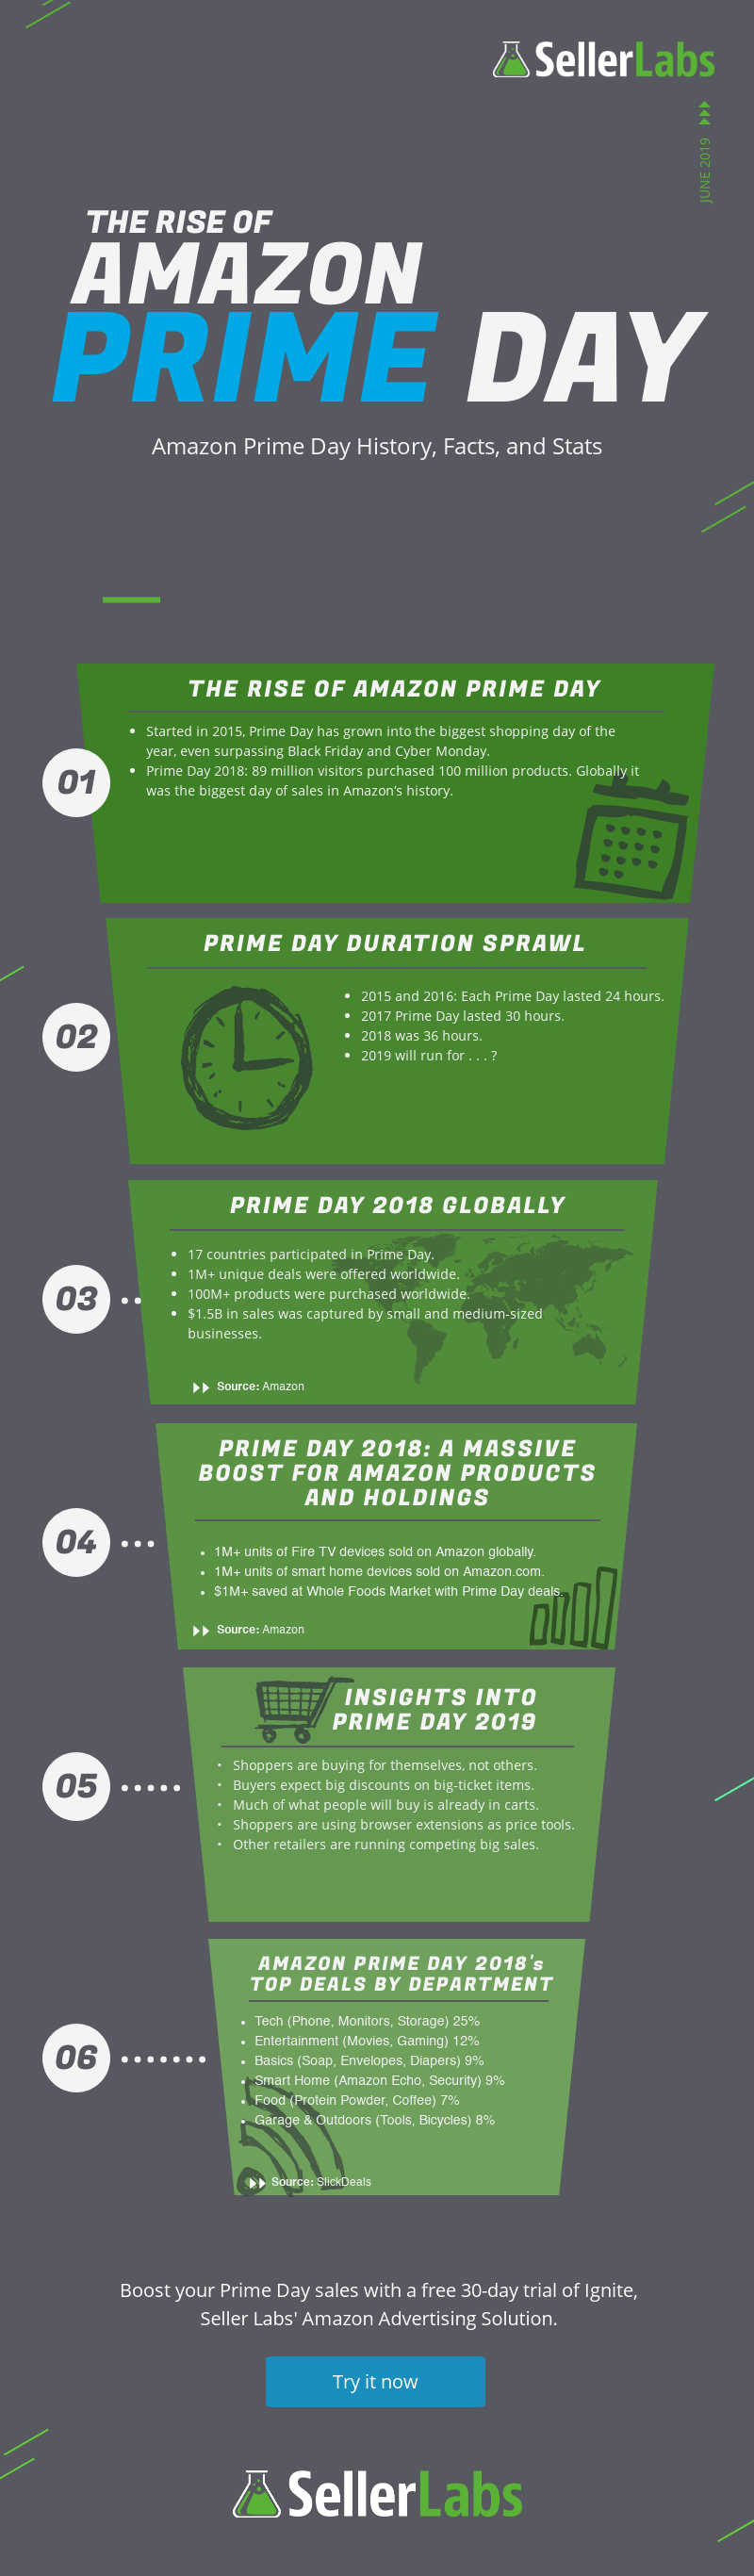 Rise of Amazon Prime Day